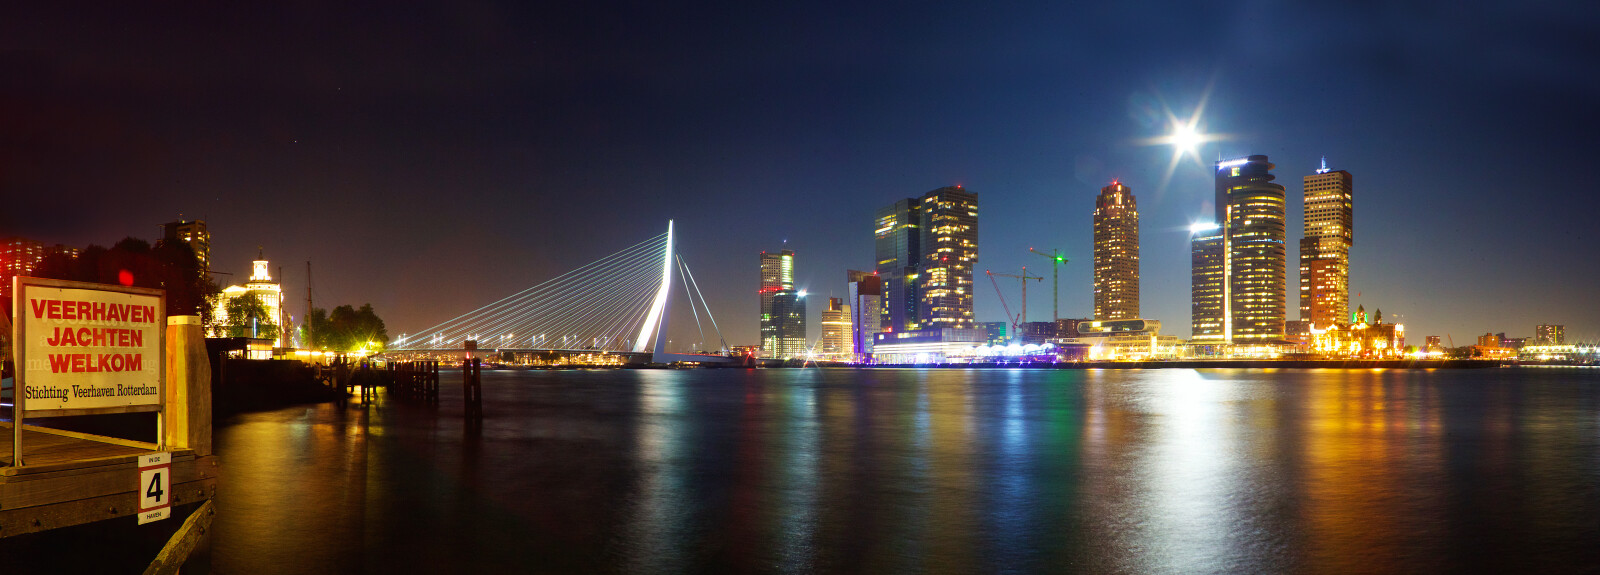 Skyline-of-Rotterdam.jpg